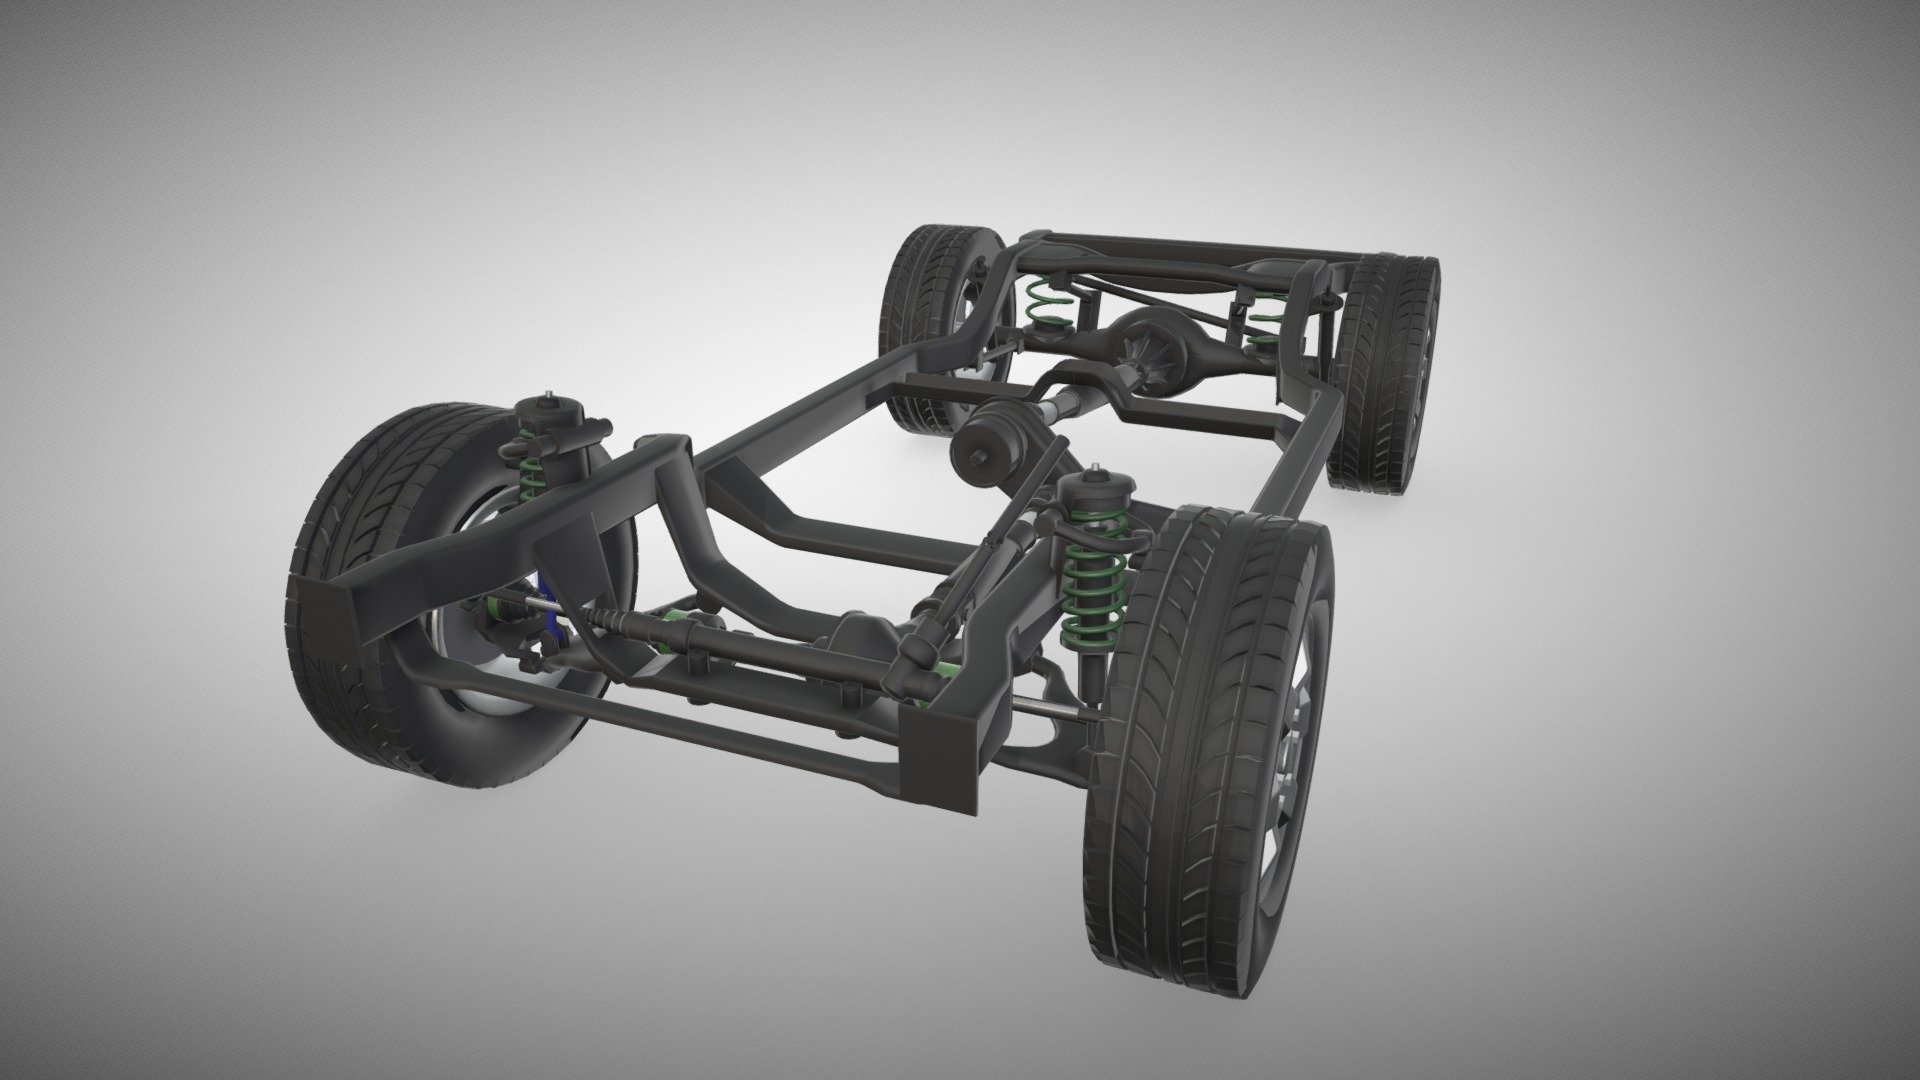 FJ Cruiser chassis. RIG - Chassis SUV - 3D model by Samidi (@cachetf) 3d model